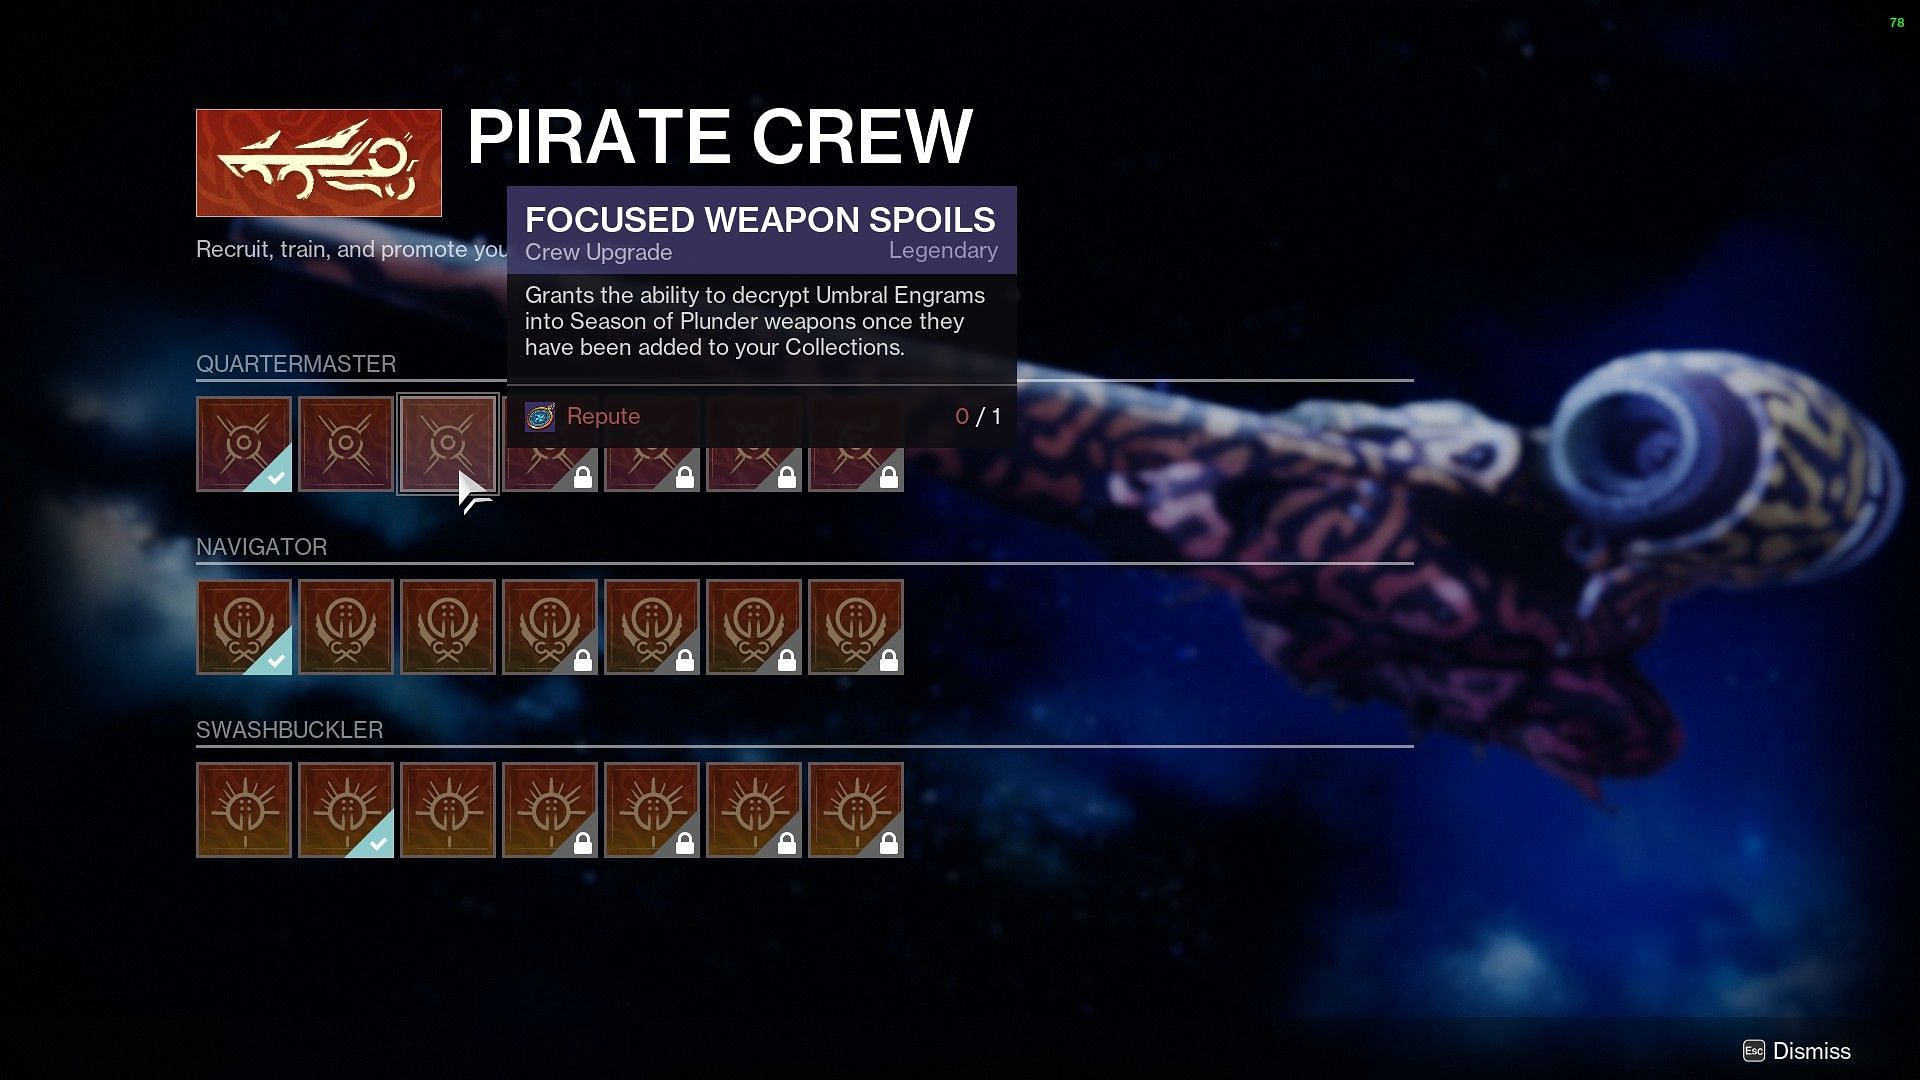 Focused Weapon Spoils under the Quartermaster menu (Image via Destiny 2)